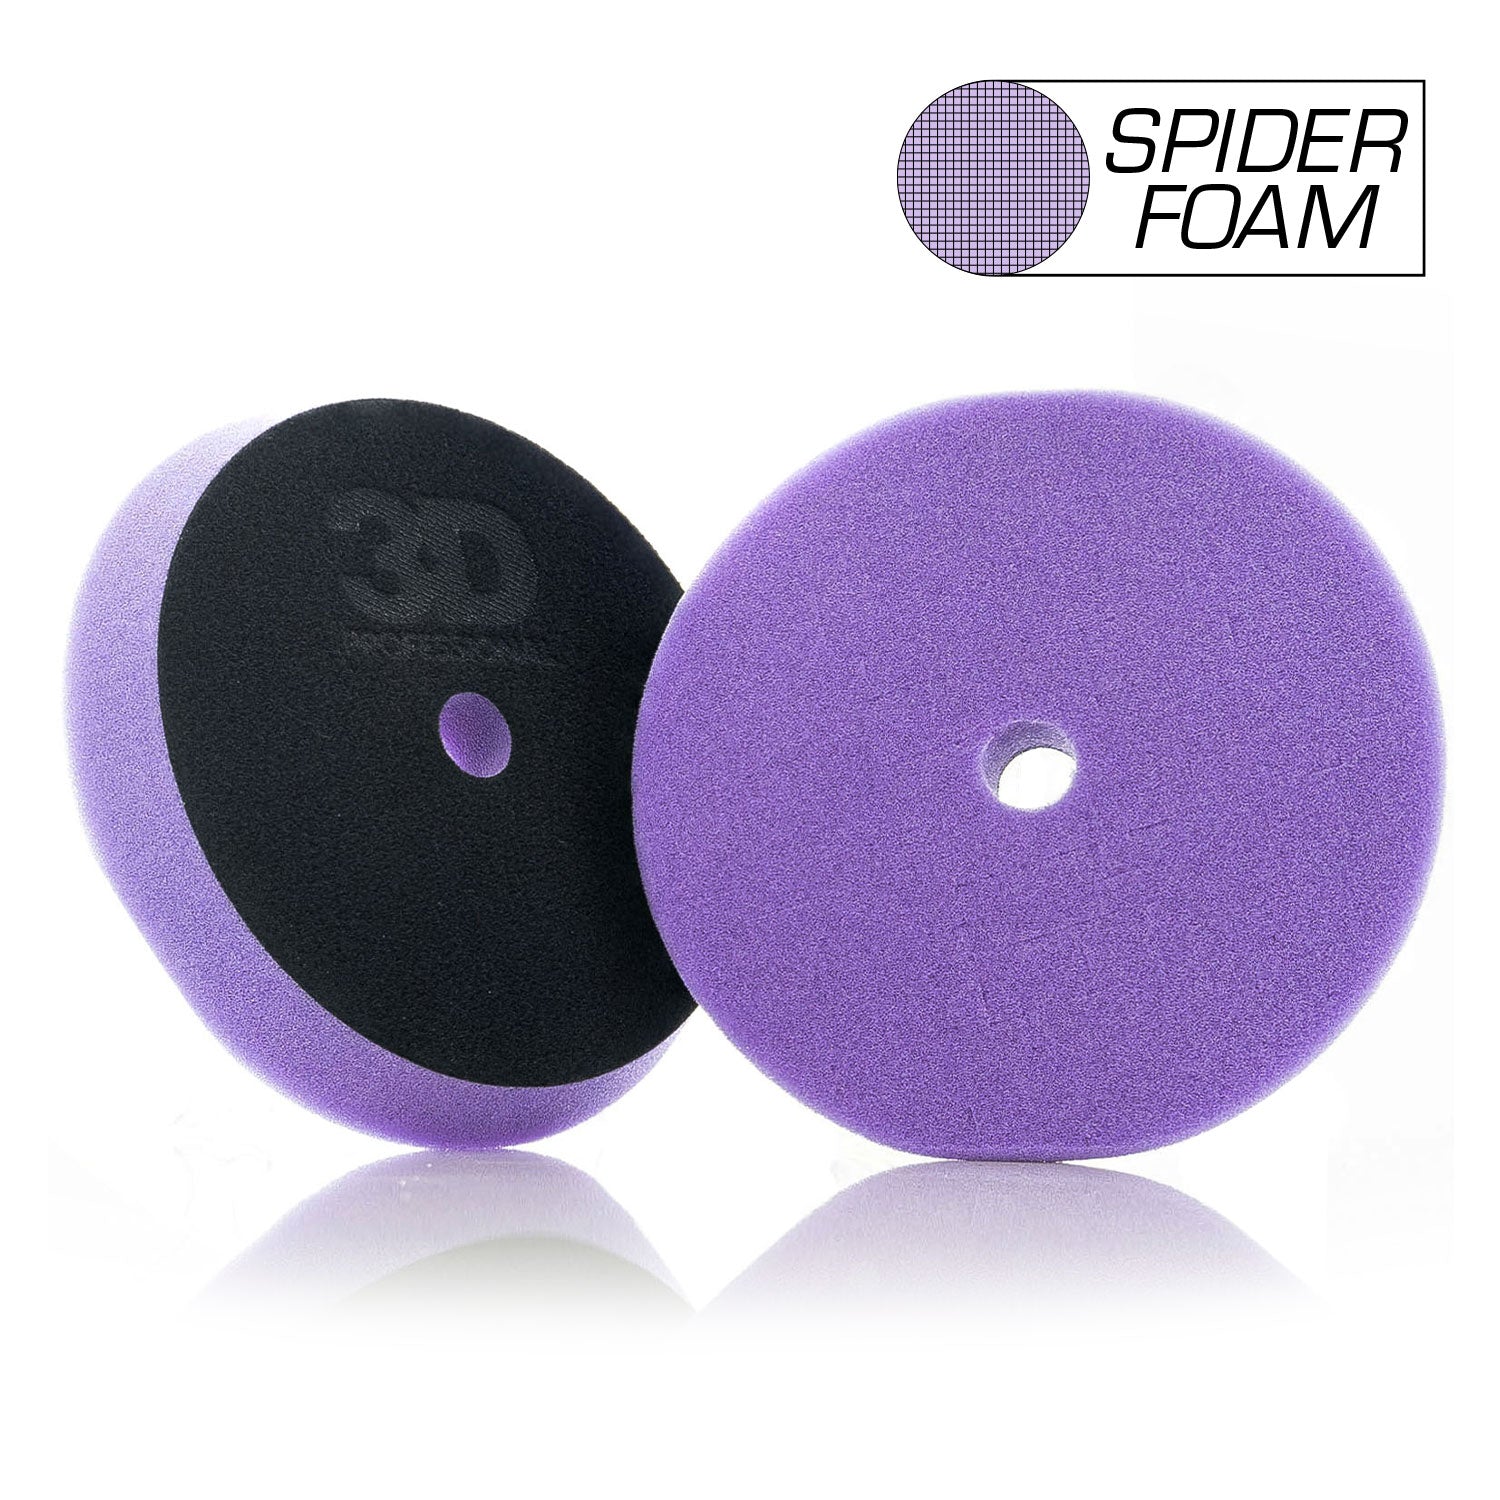 light-purple-6-inch-spider-foam-pads-3D